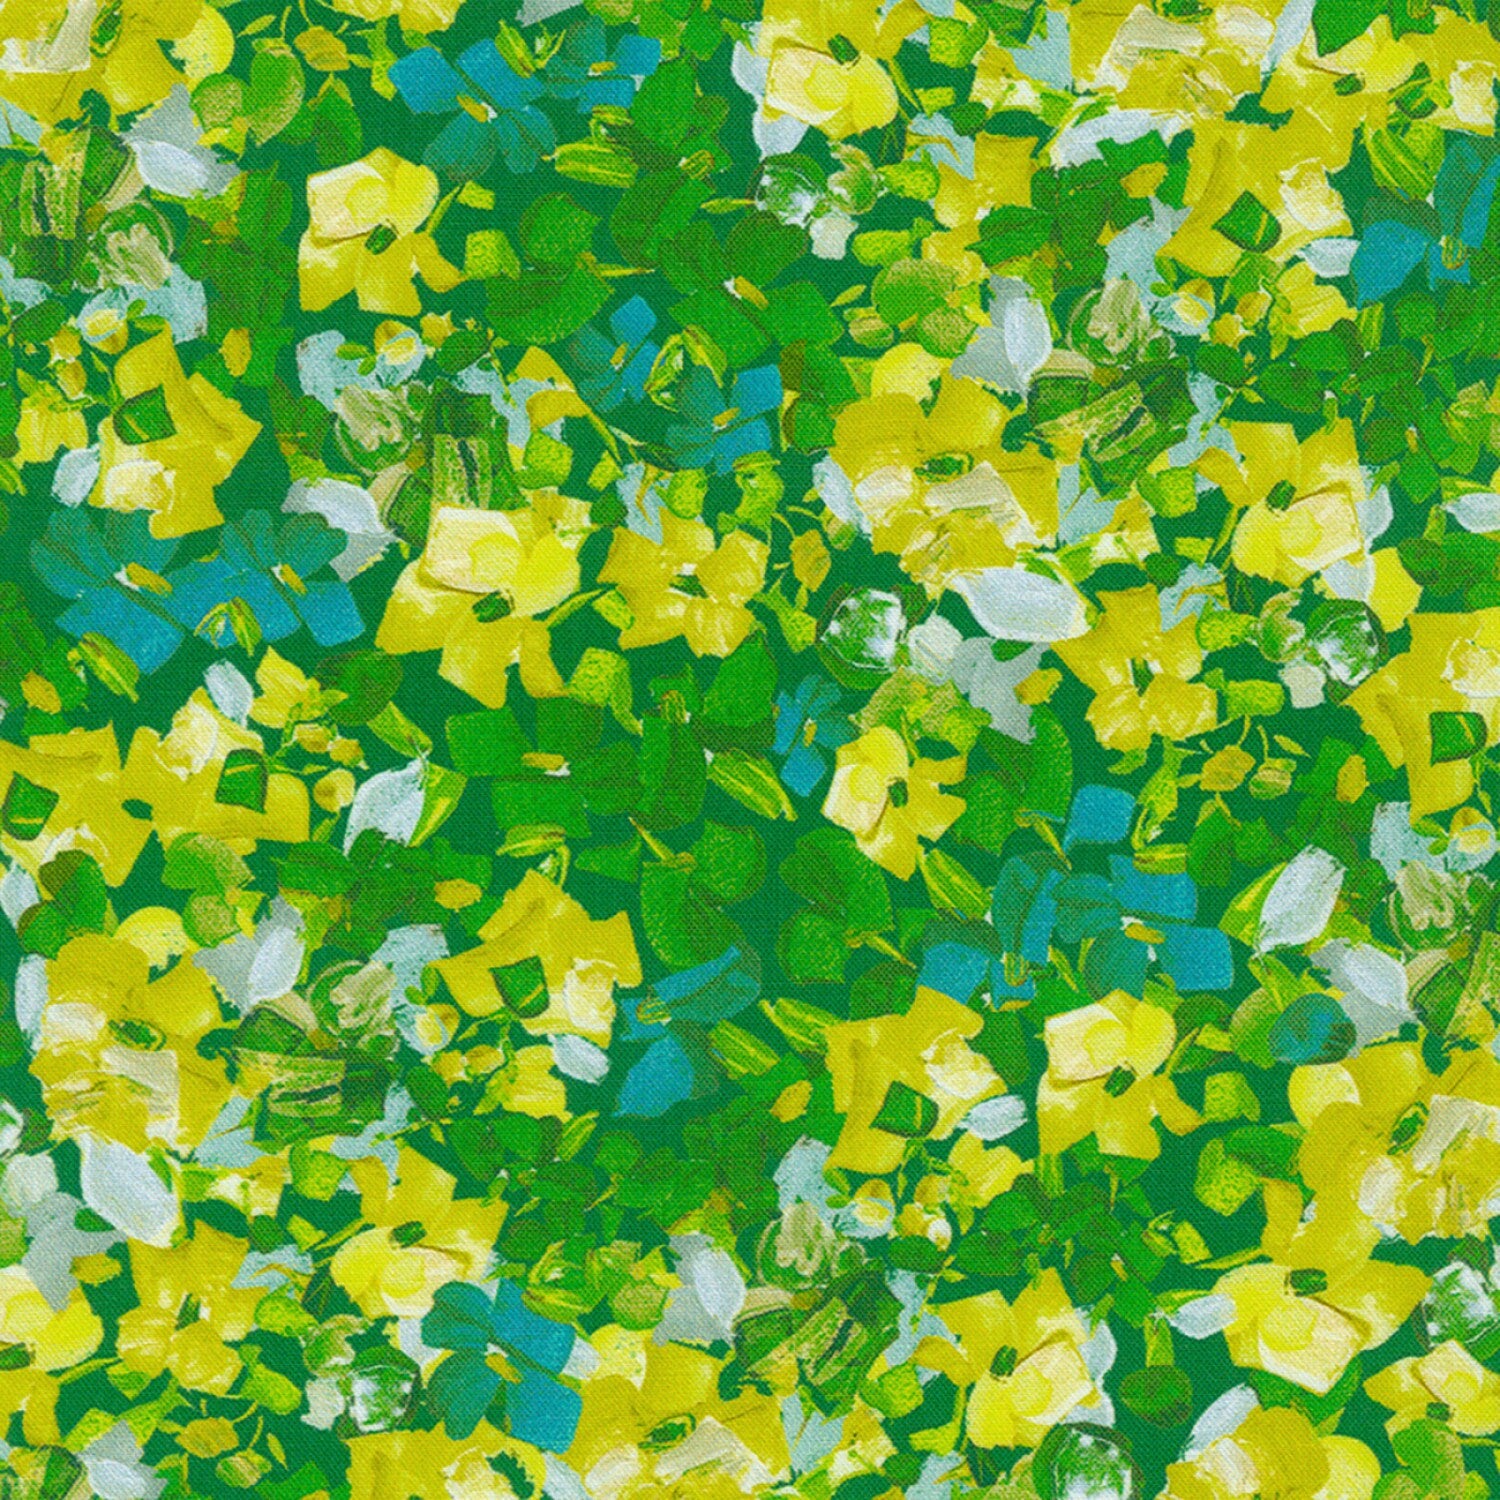 Painterly Petals 24 Piece Fat Quarter Bundle, Robert Kaufman FQ-2080-24, Bright Watercolor Floral Fabric, 18" x 22" Fat Quarter Yard Cuts